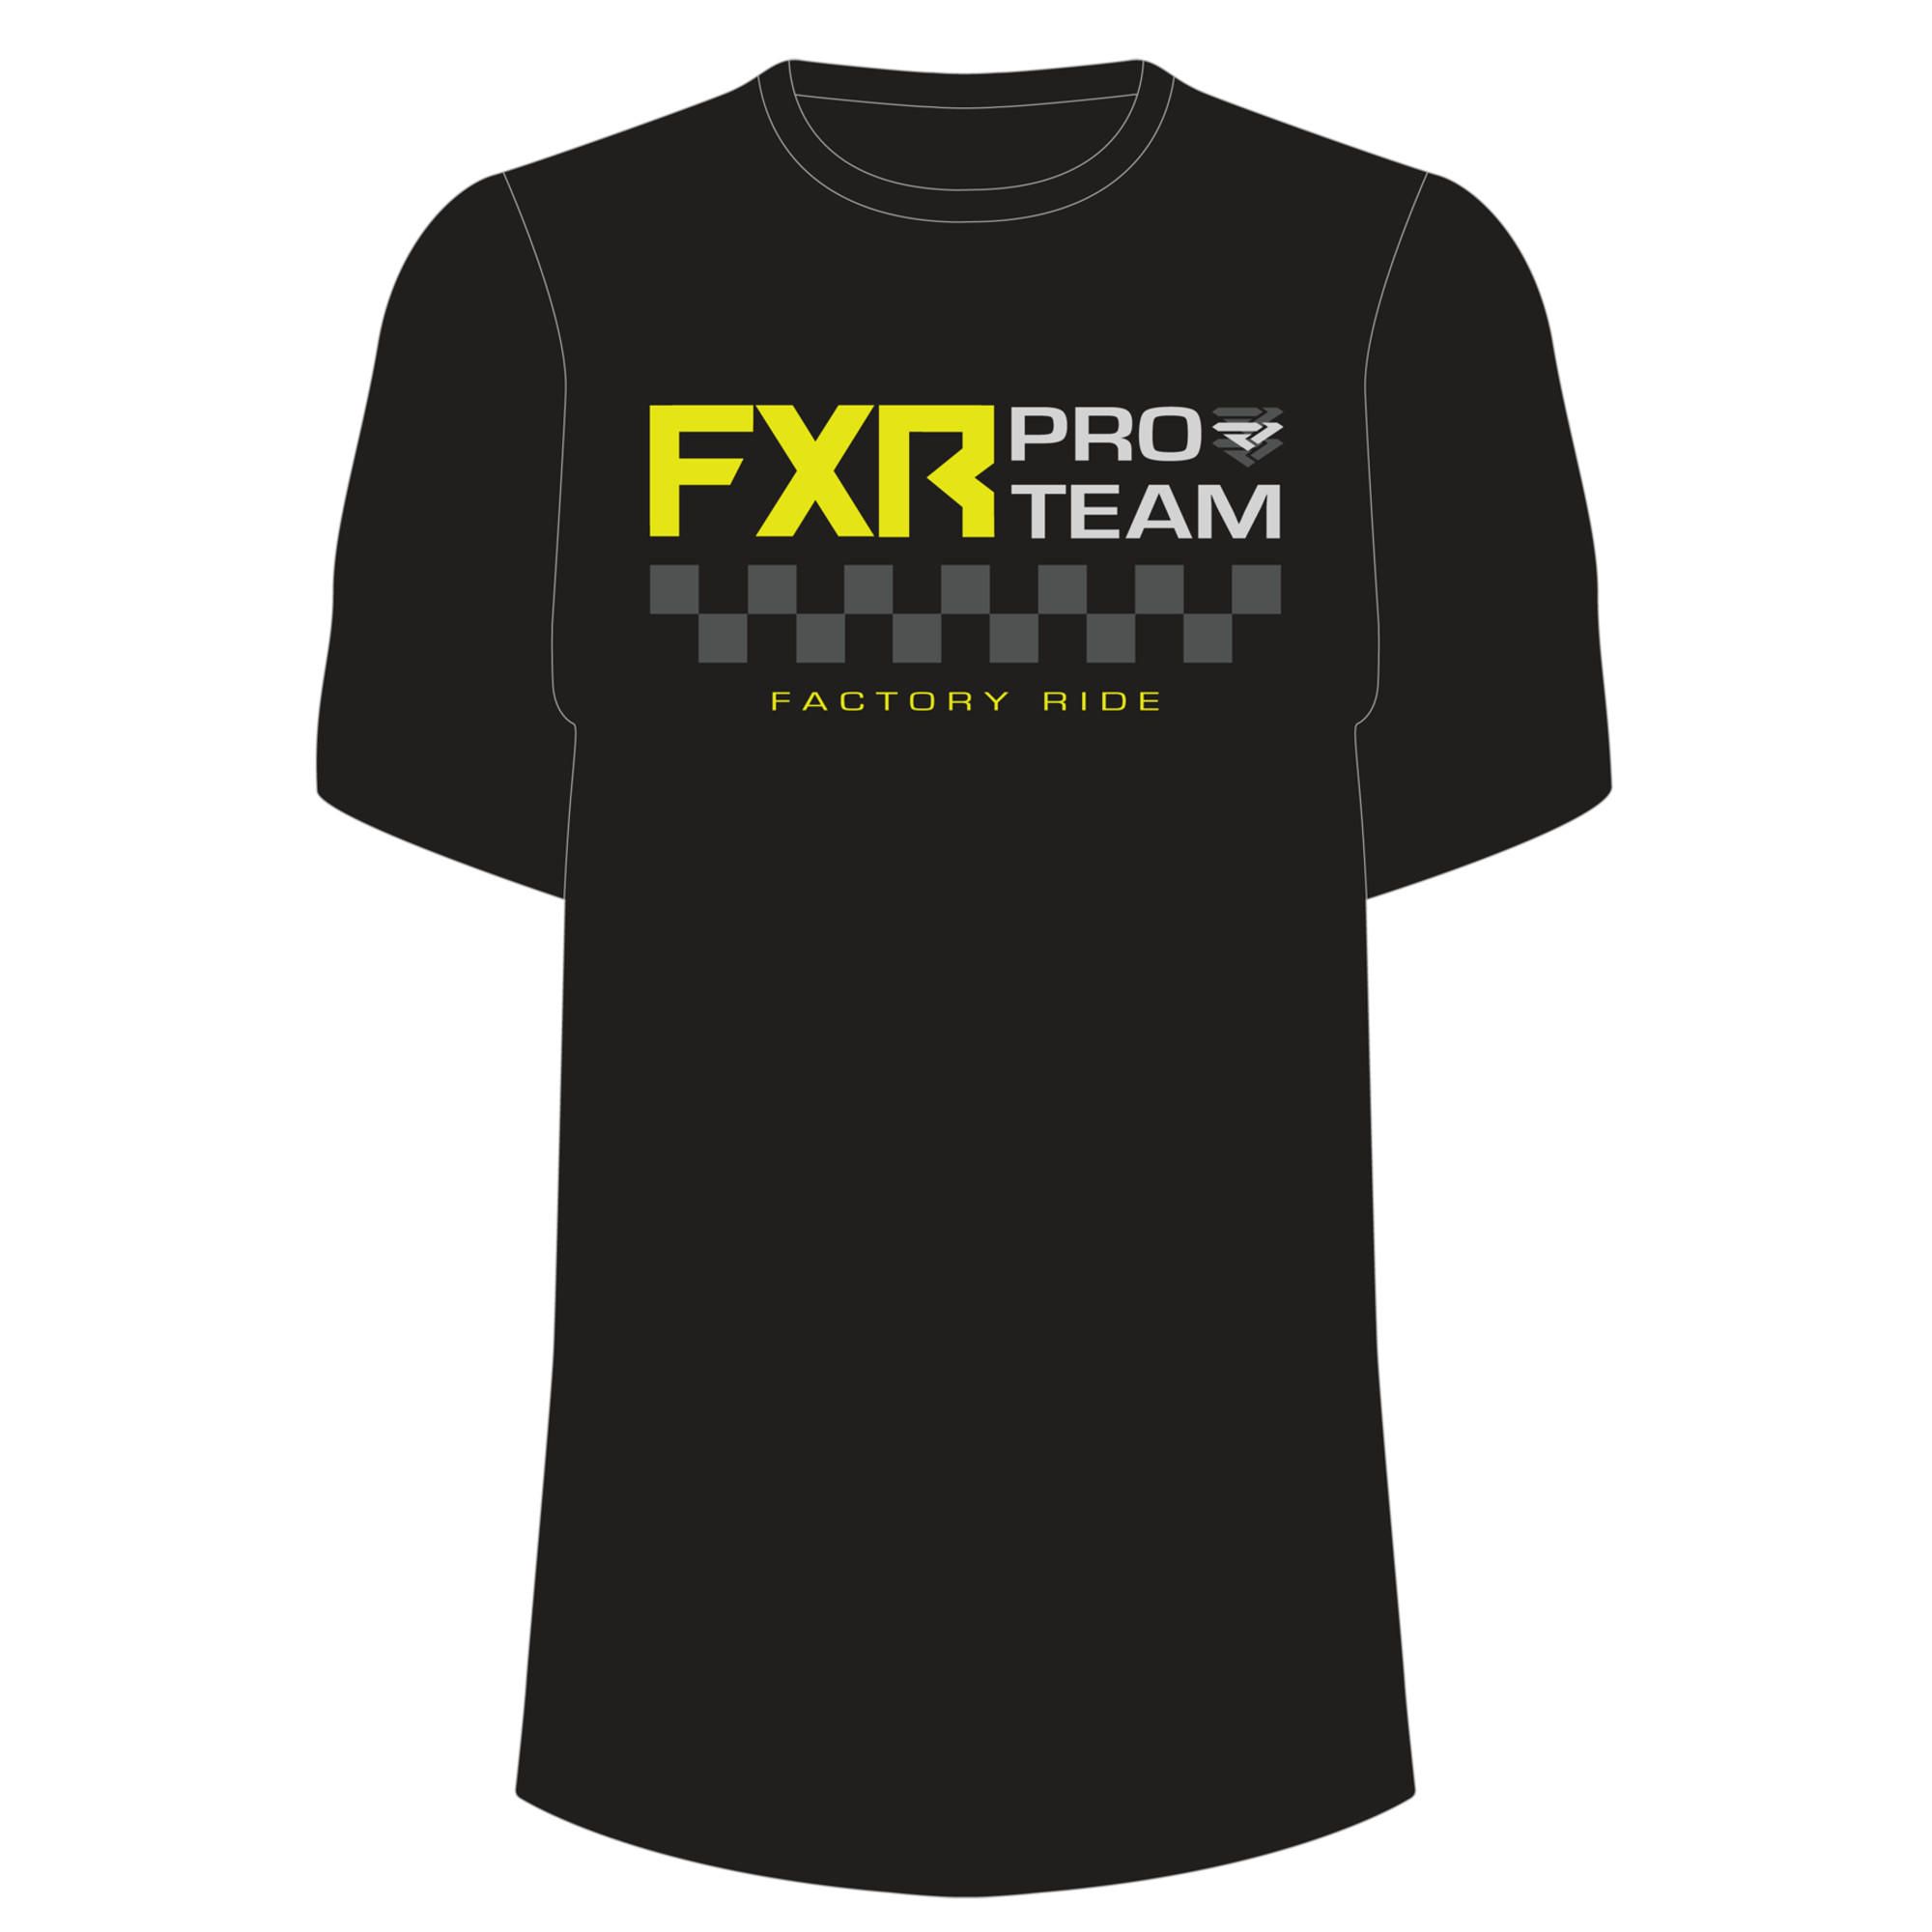 fxr racing t-shirt shirts for men team premium